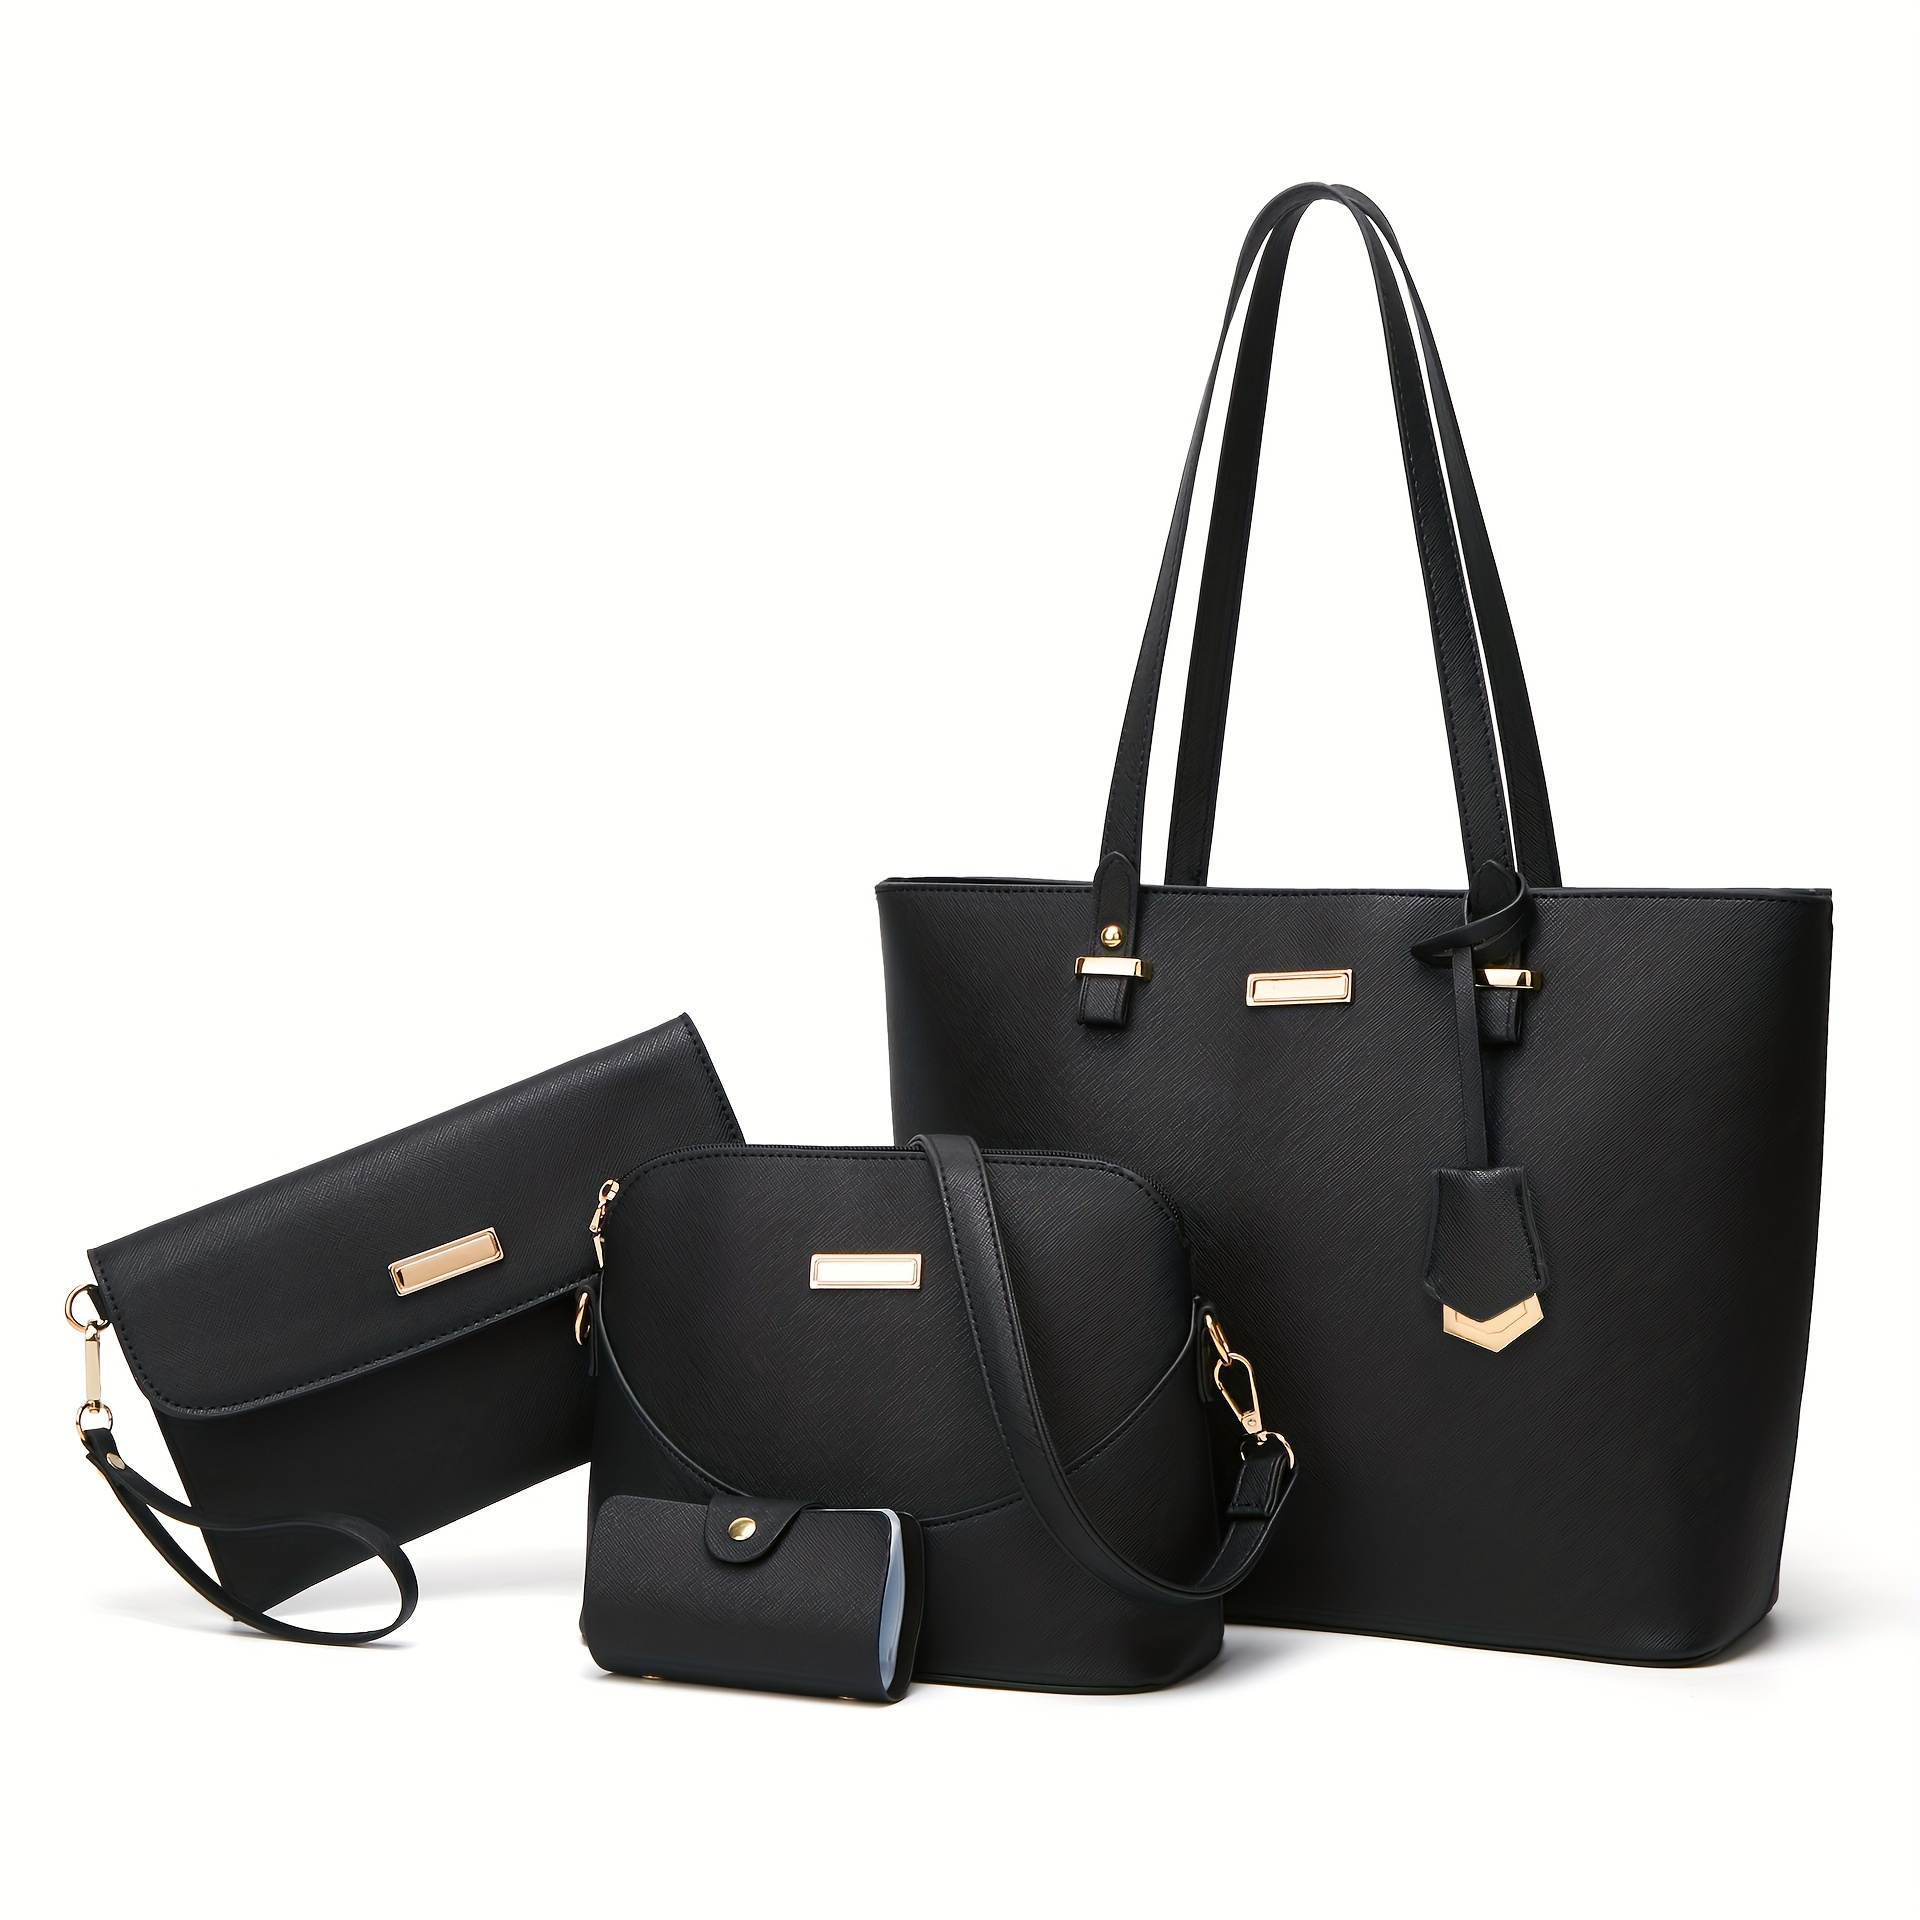 4Pcs Set Women Fashion Handbags Tote Bags Shoulder Bag Top Handle